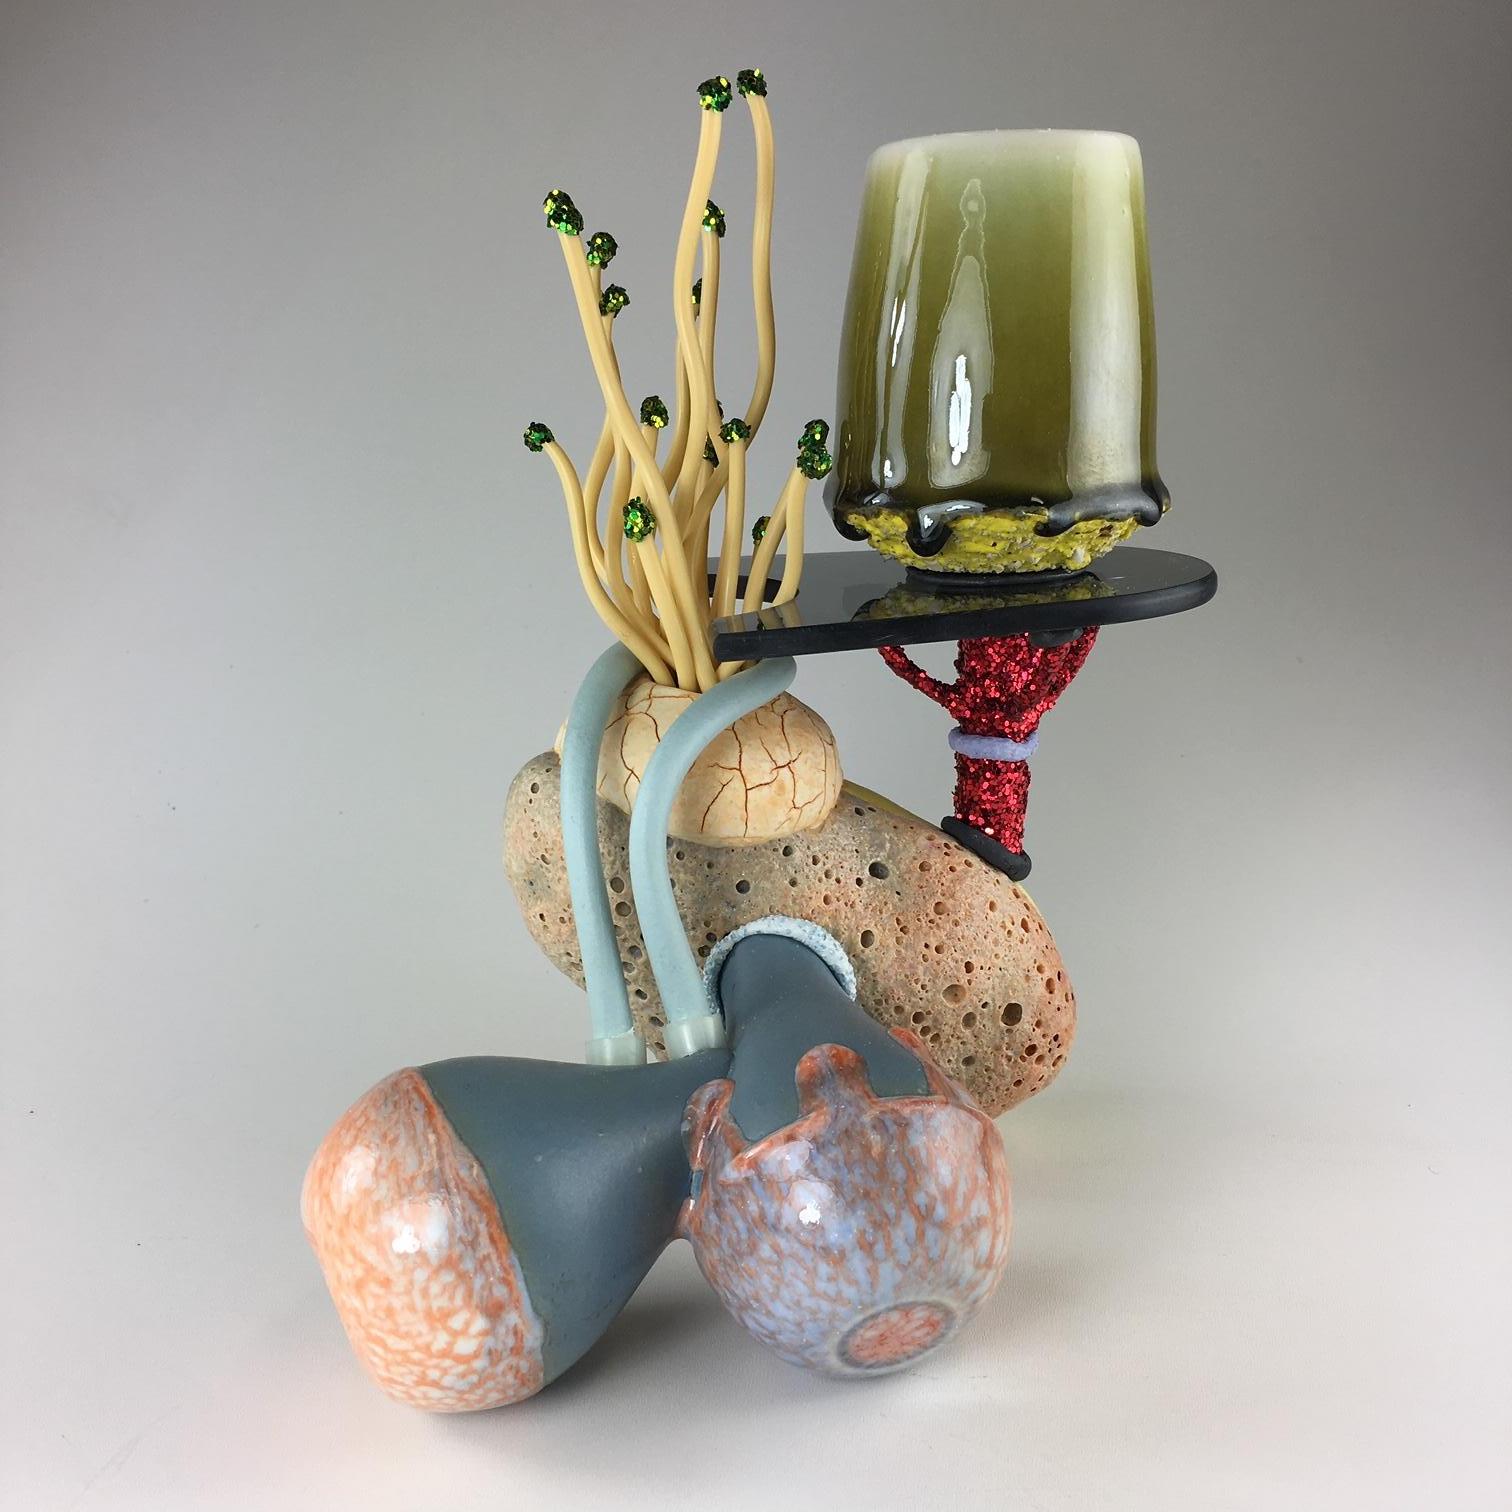 "Mug Composition #29", Contemporary, Ceramic, Sculpture, Mixed Media, Glaze - Mixed Media Art by Matt Mitros